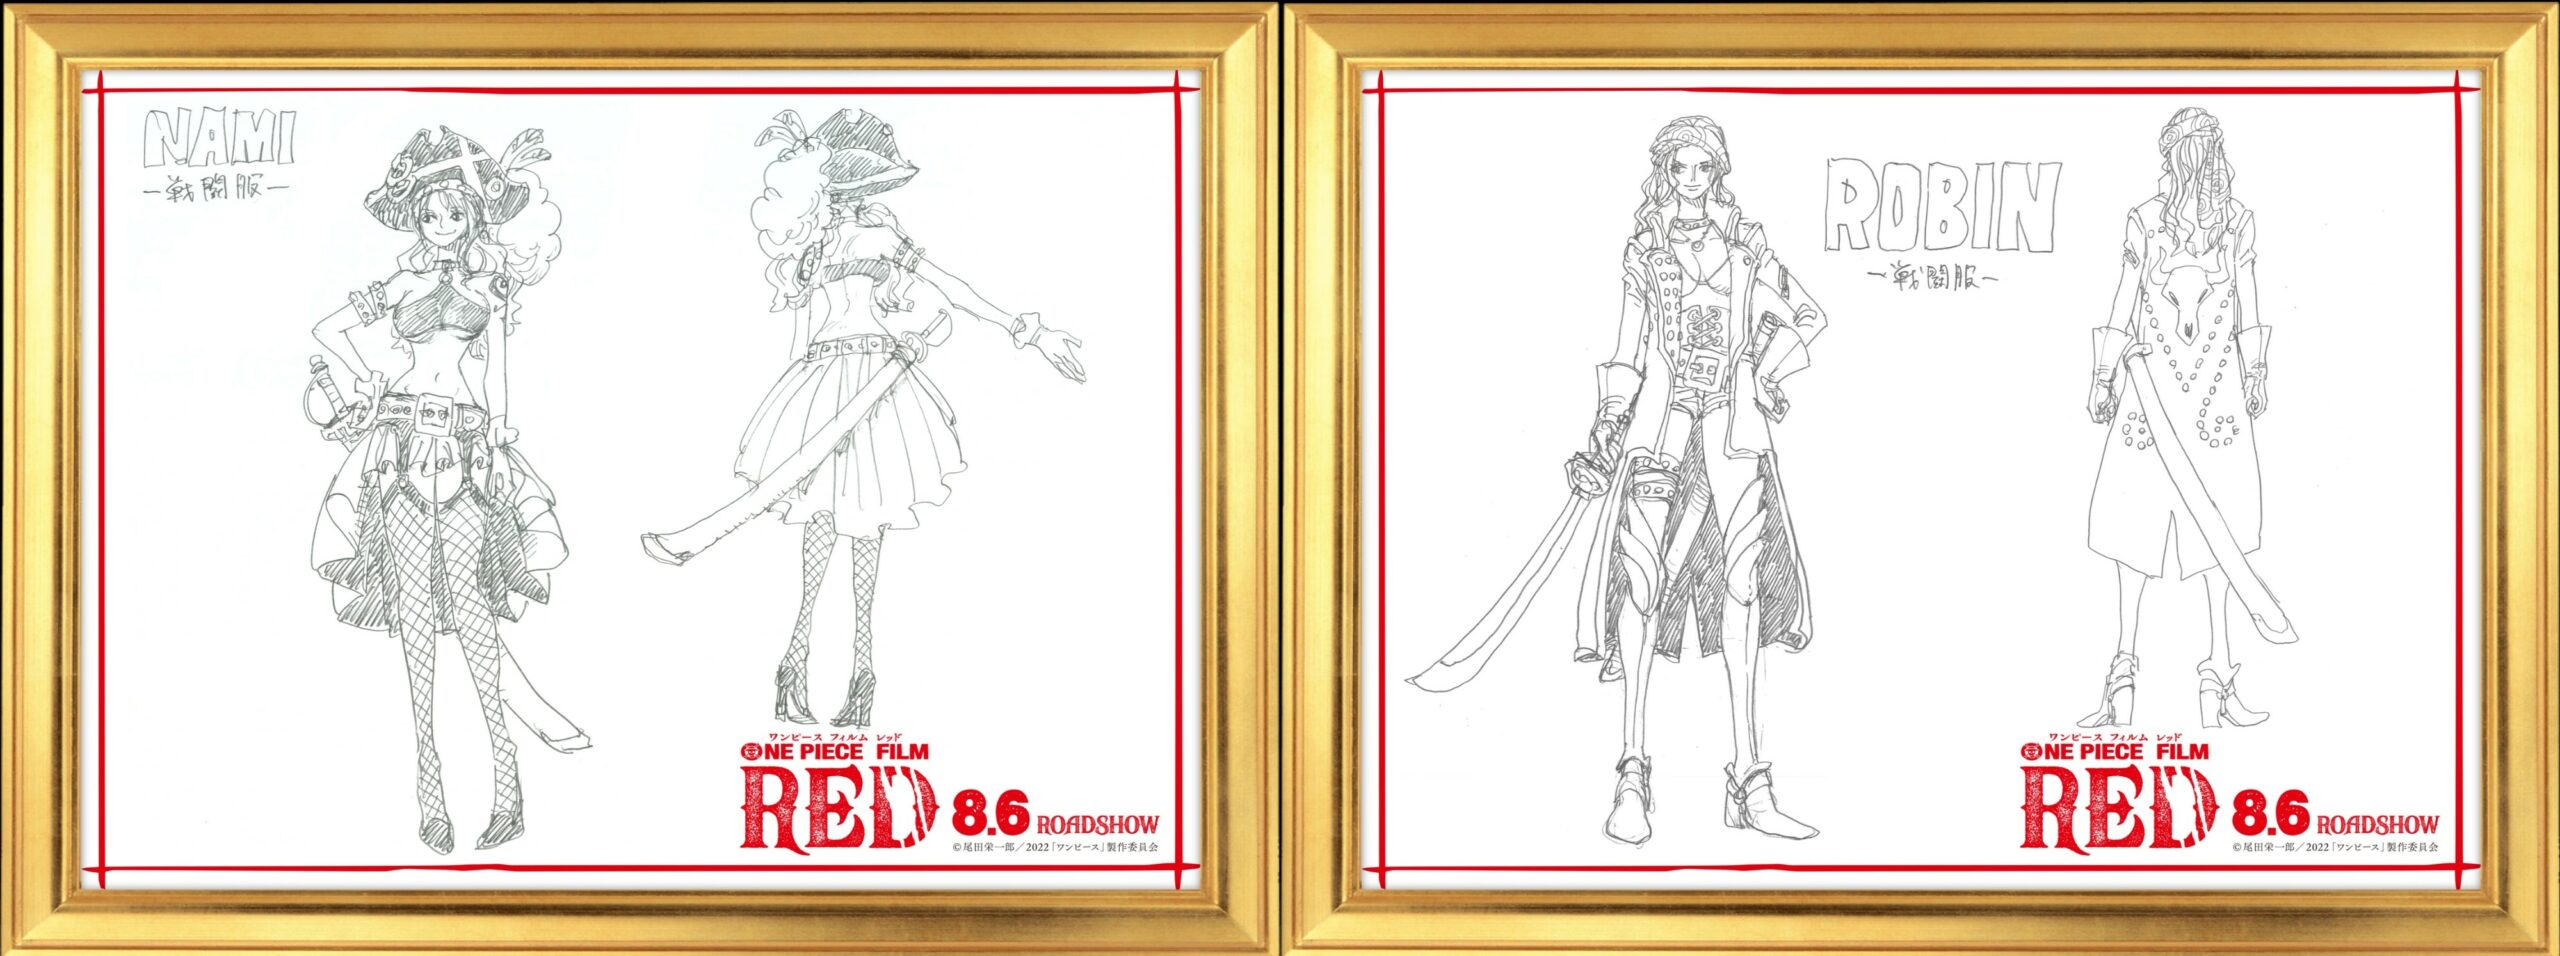 Nami and Robin (battle uniform sketches by Eiichiro Oda)